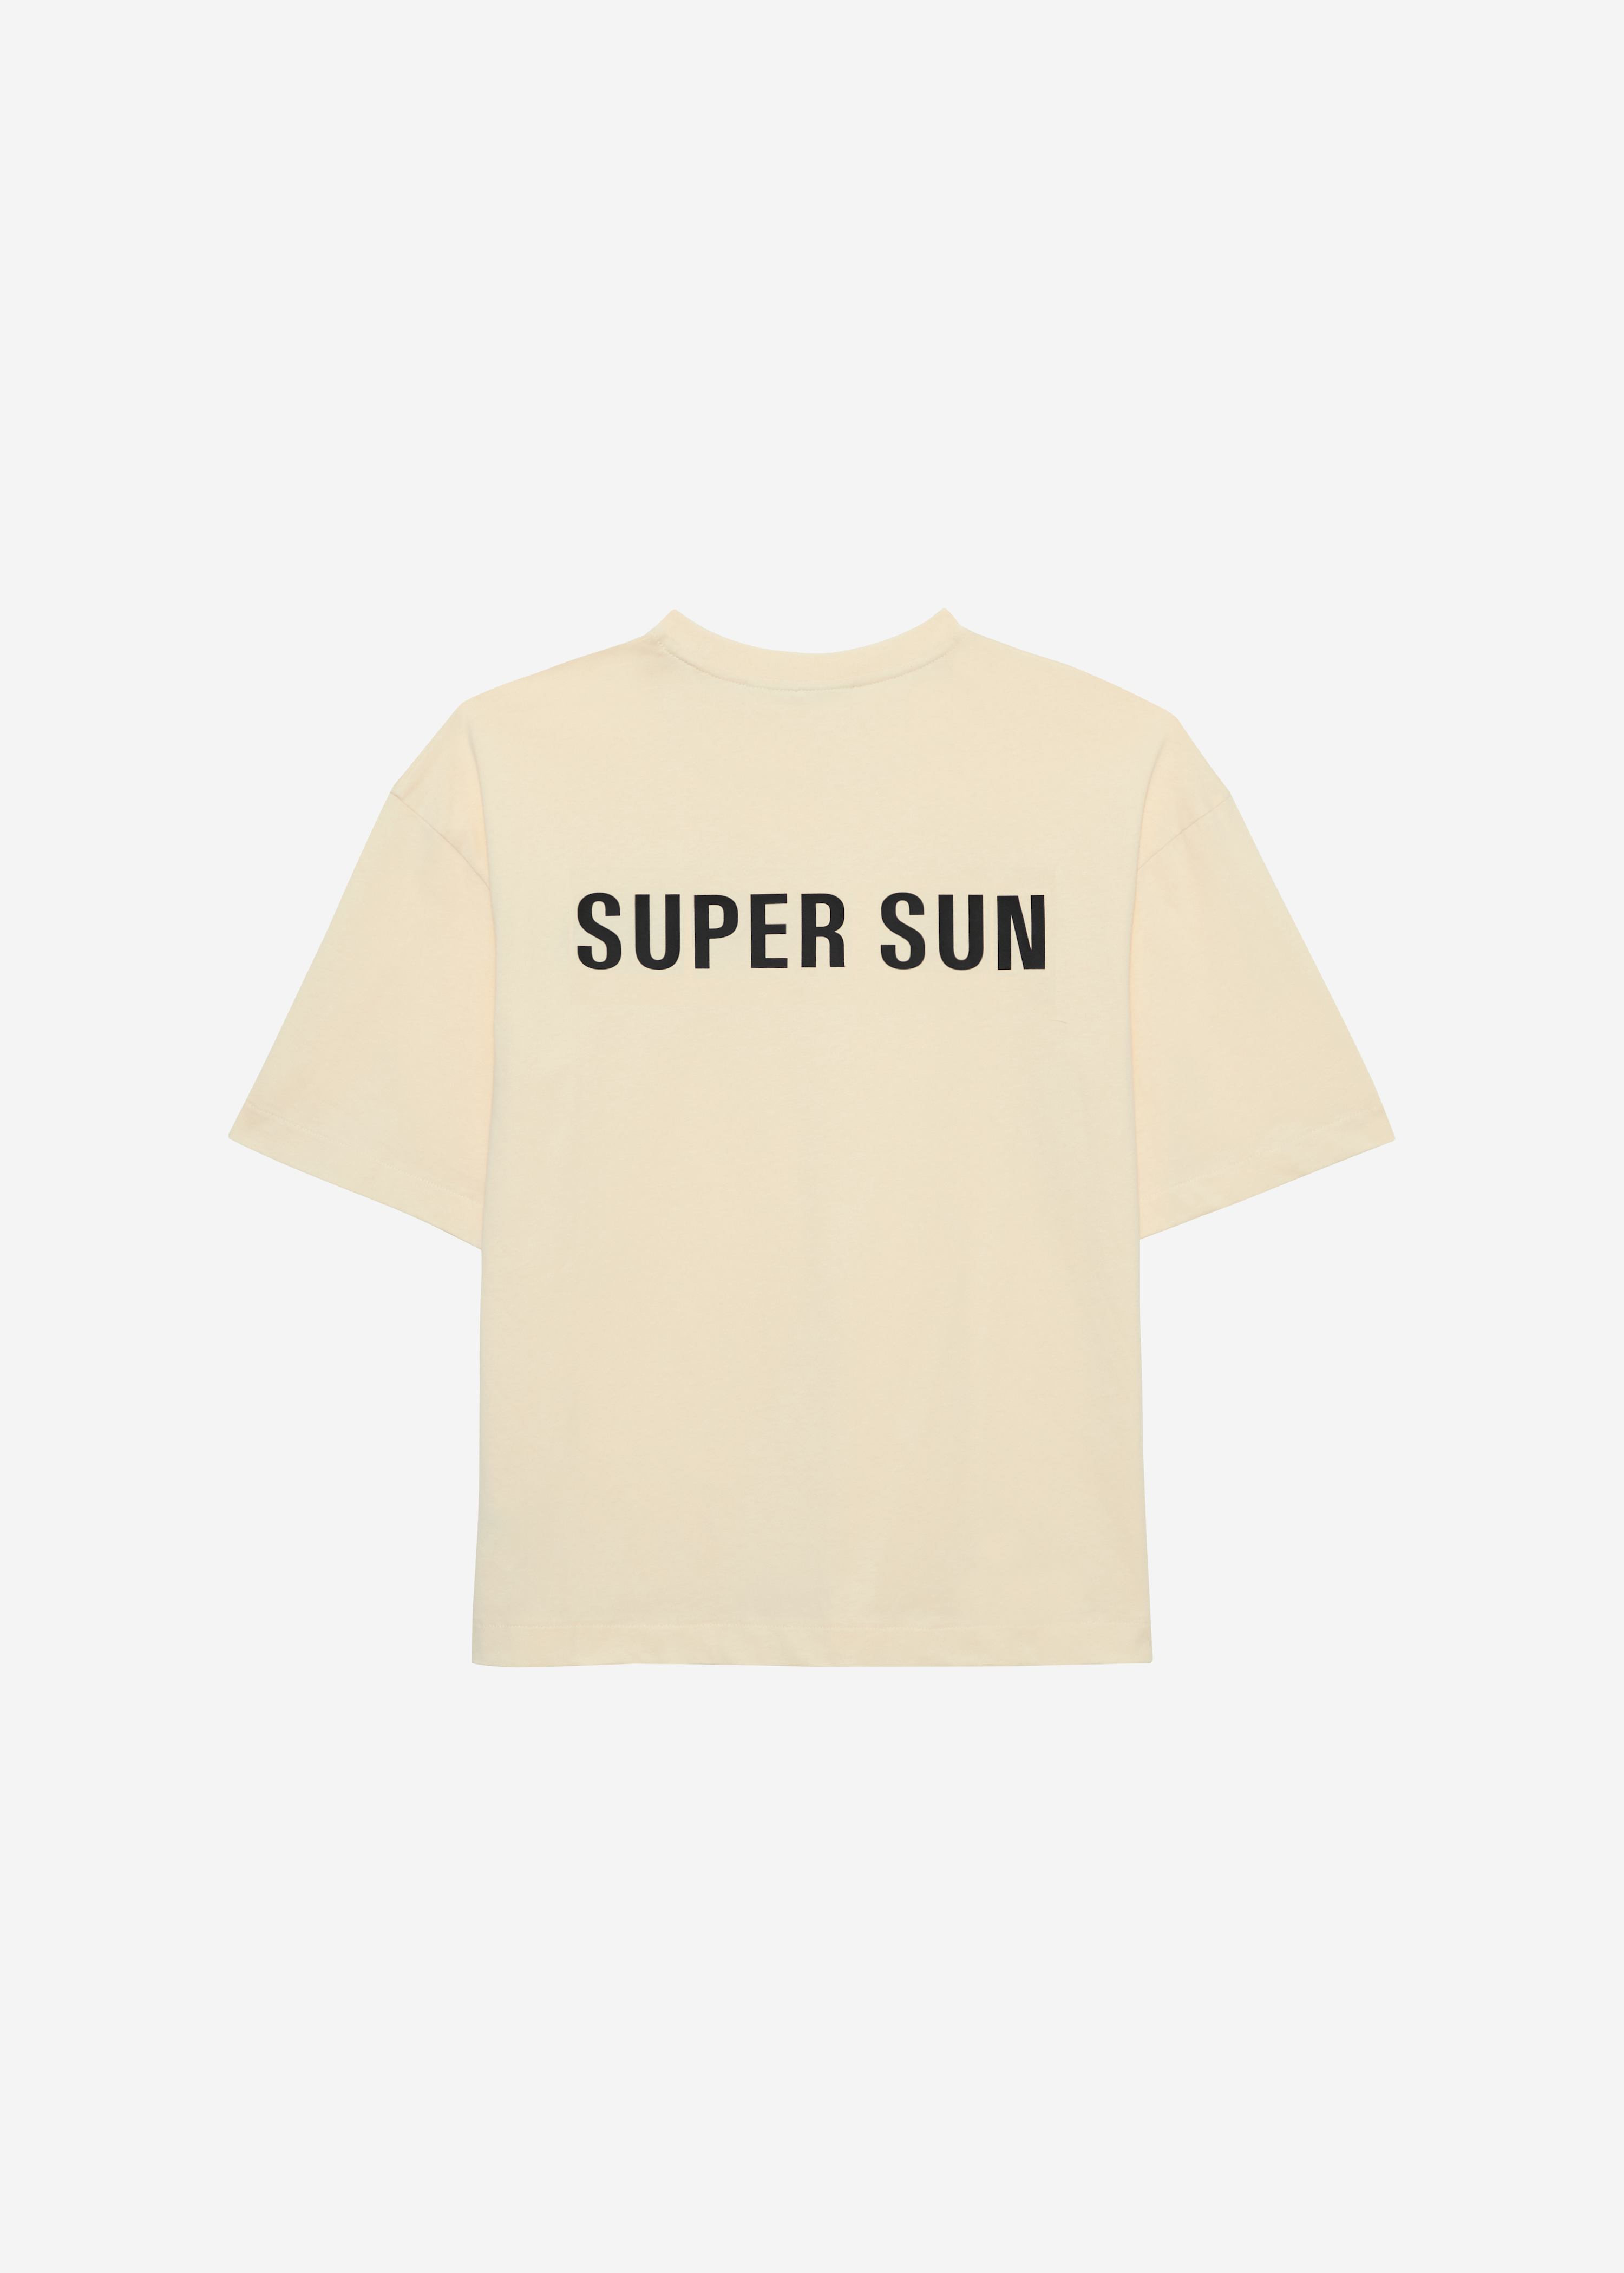 CLOTHING – SUPER SUN